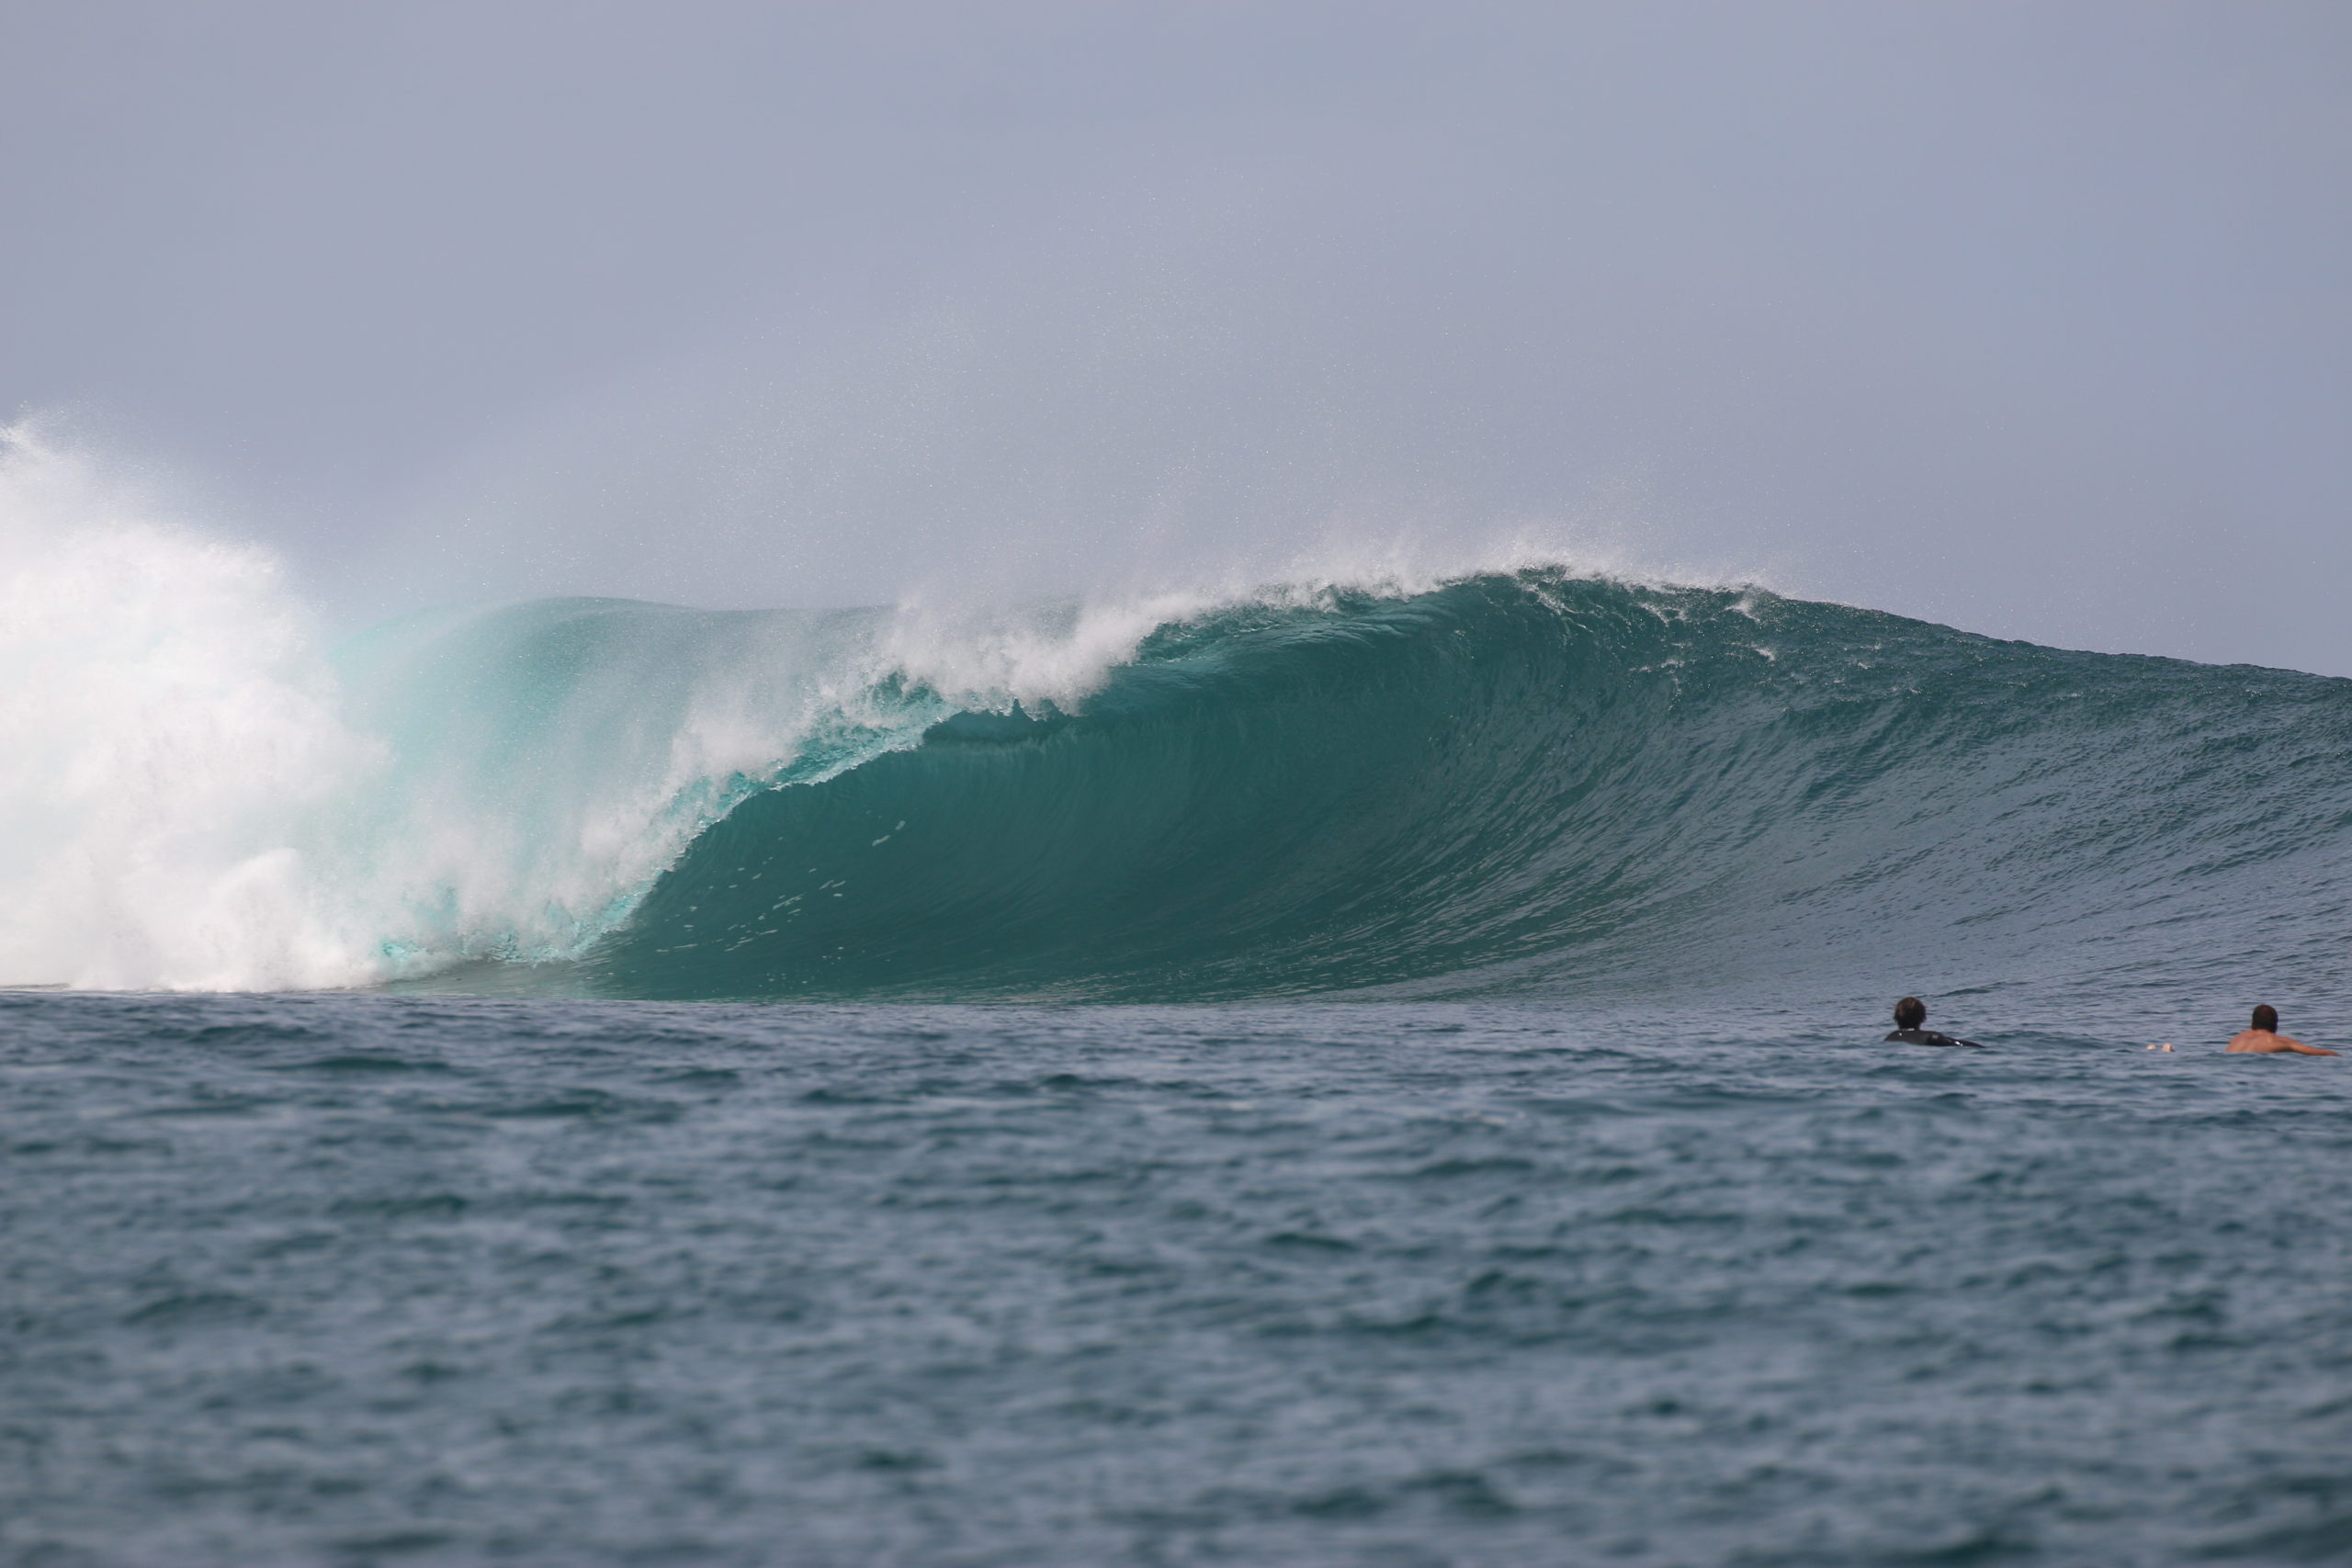 Naga Laut Mentawai surf charter